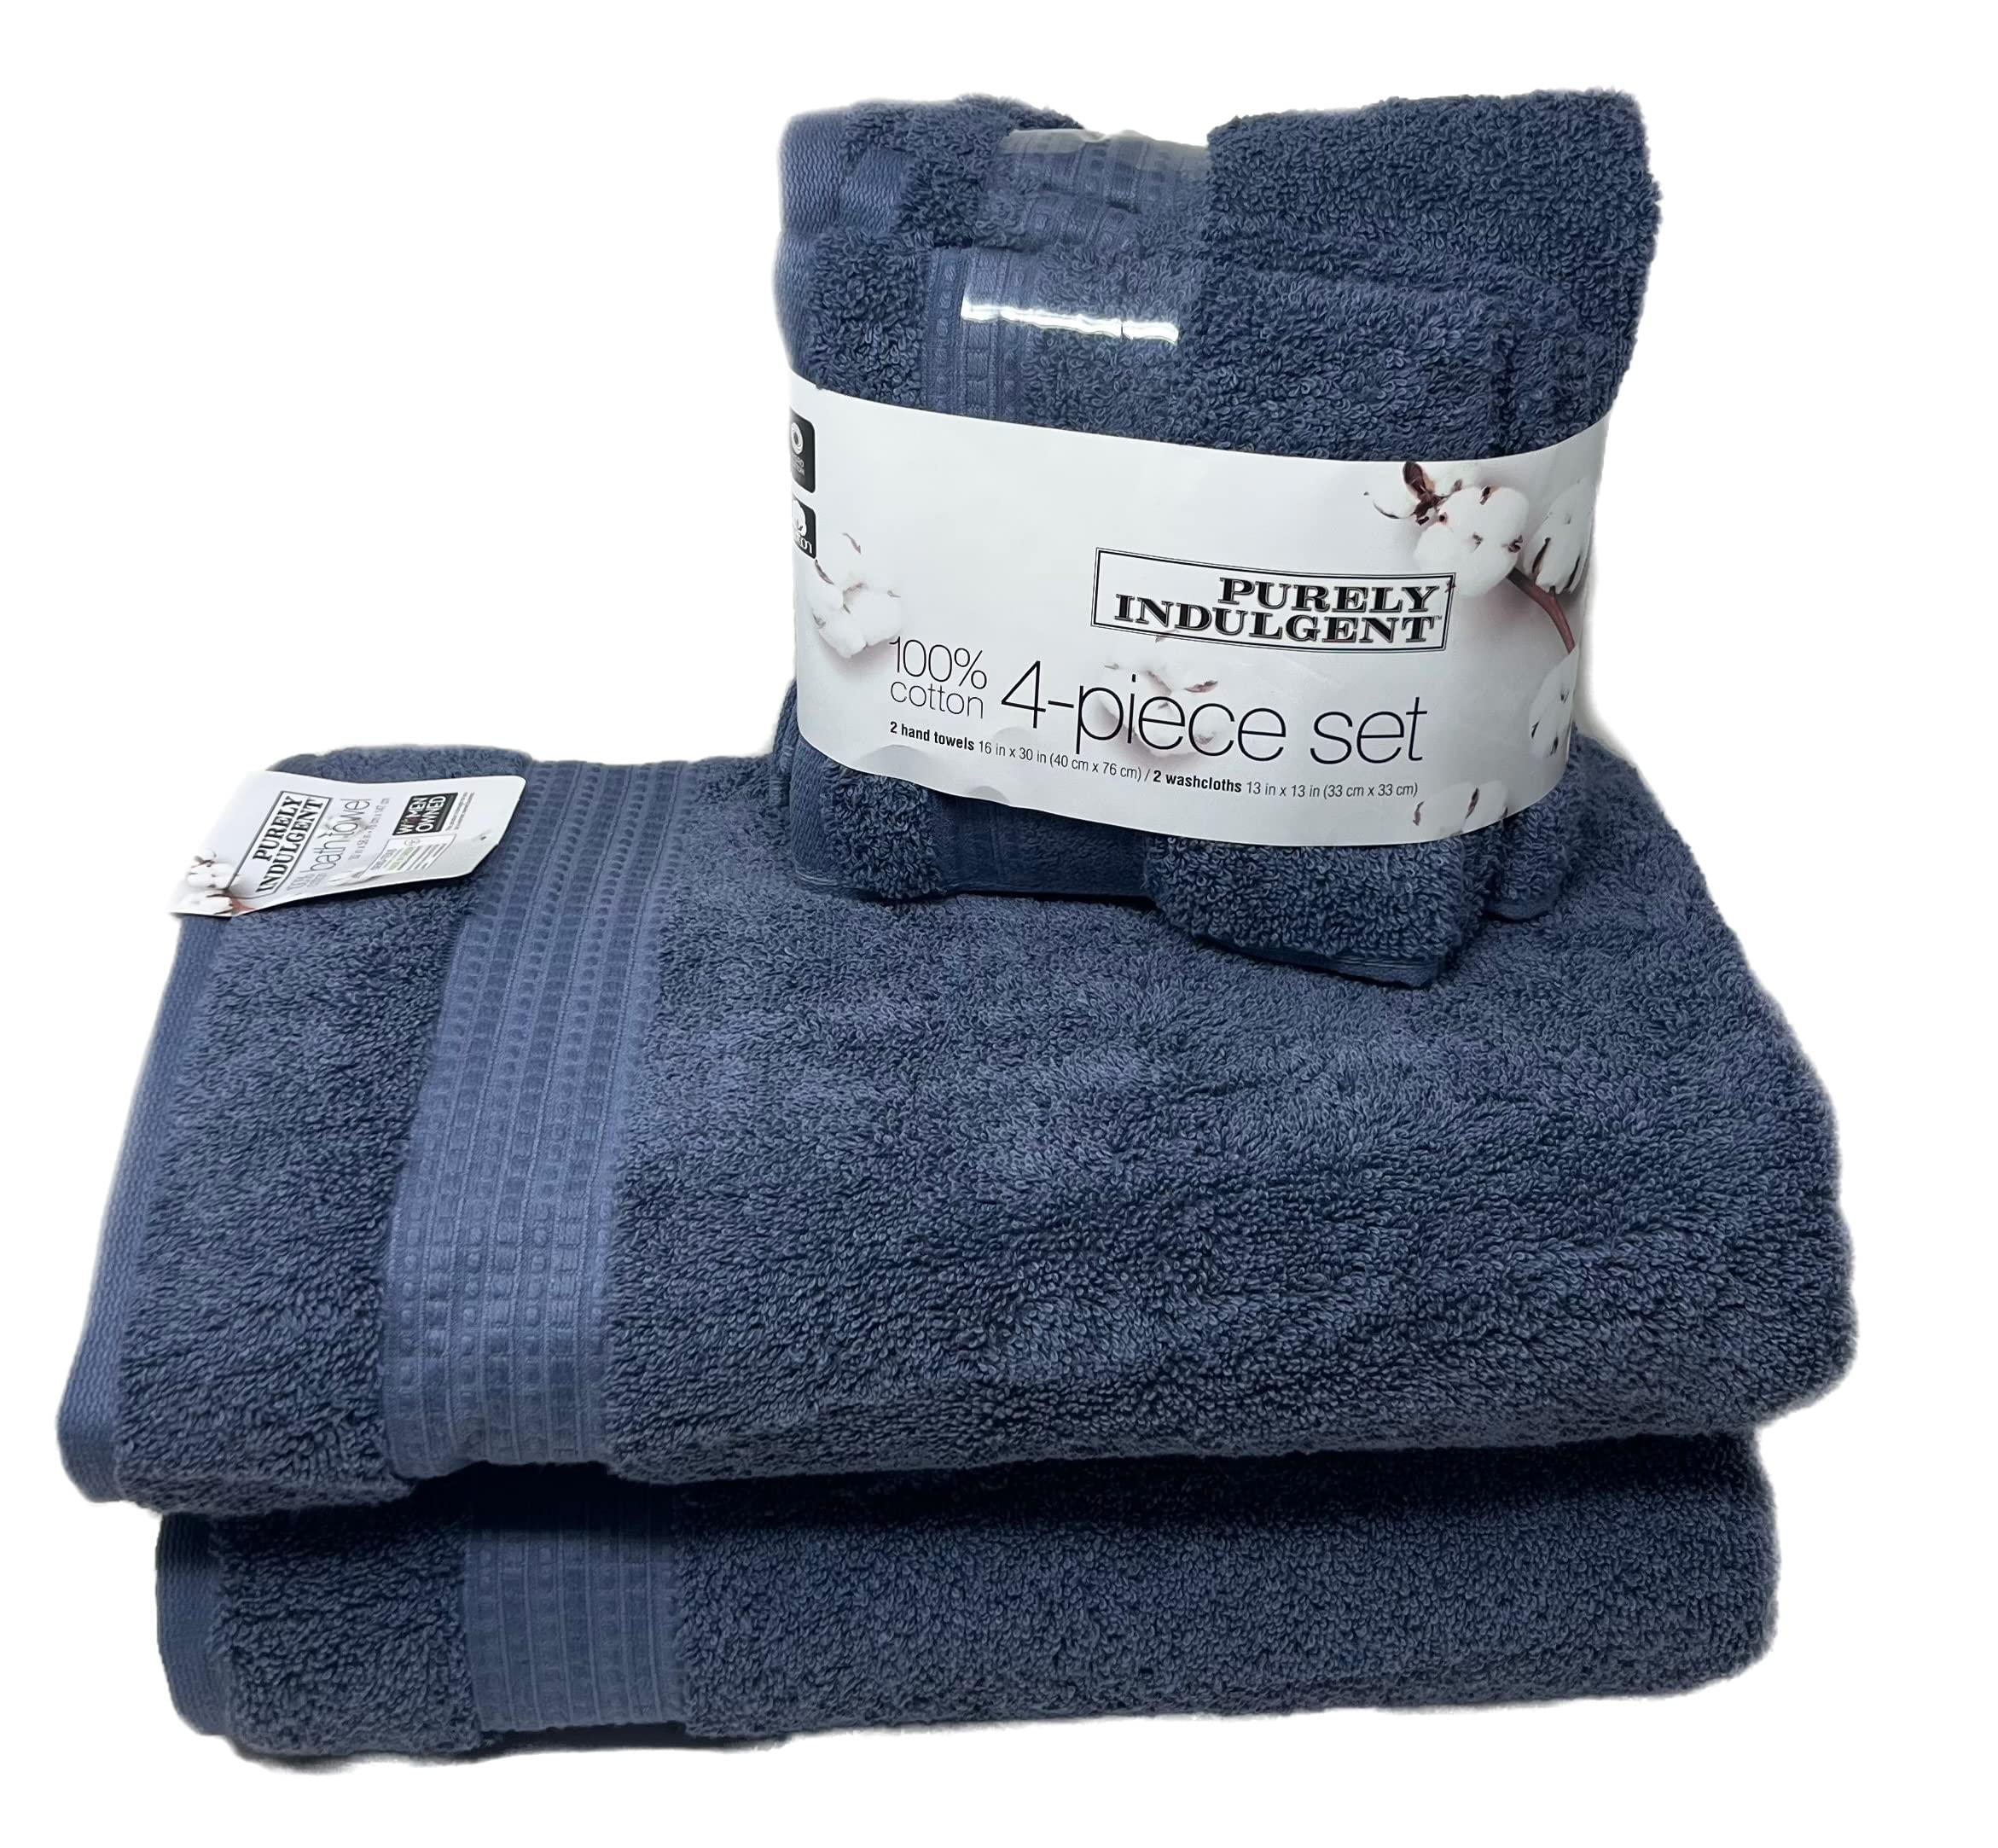 Purely Indulgent 100 HydroCotton Includes 2 Luxury Bath Towels 2 Hand Towels 2 Washcloths Quality Ultra Soft Towel